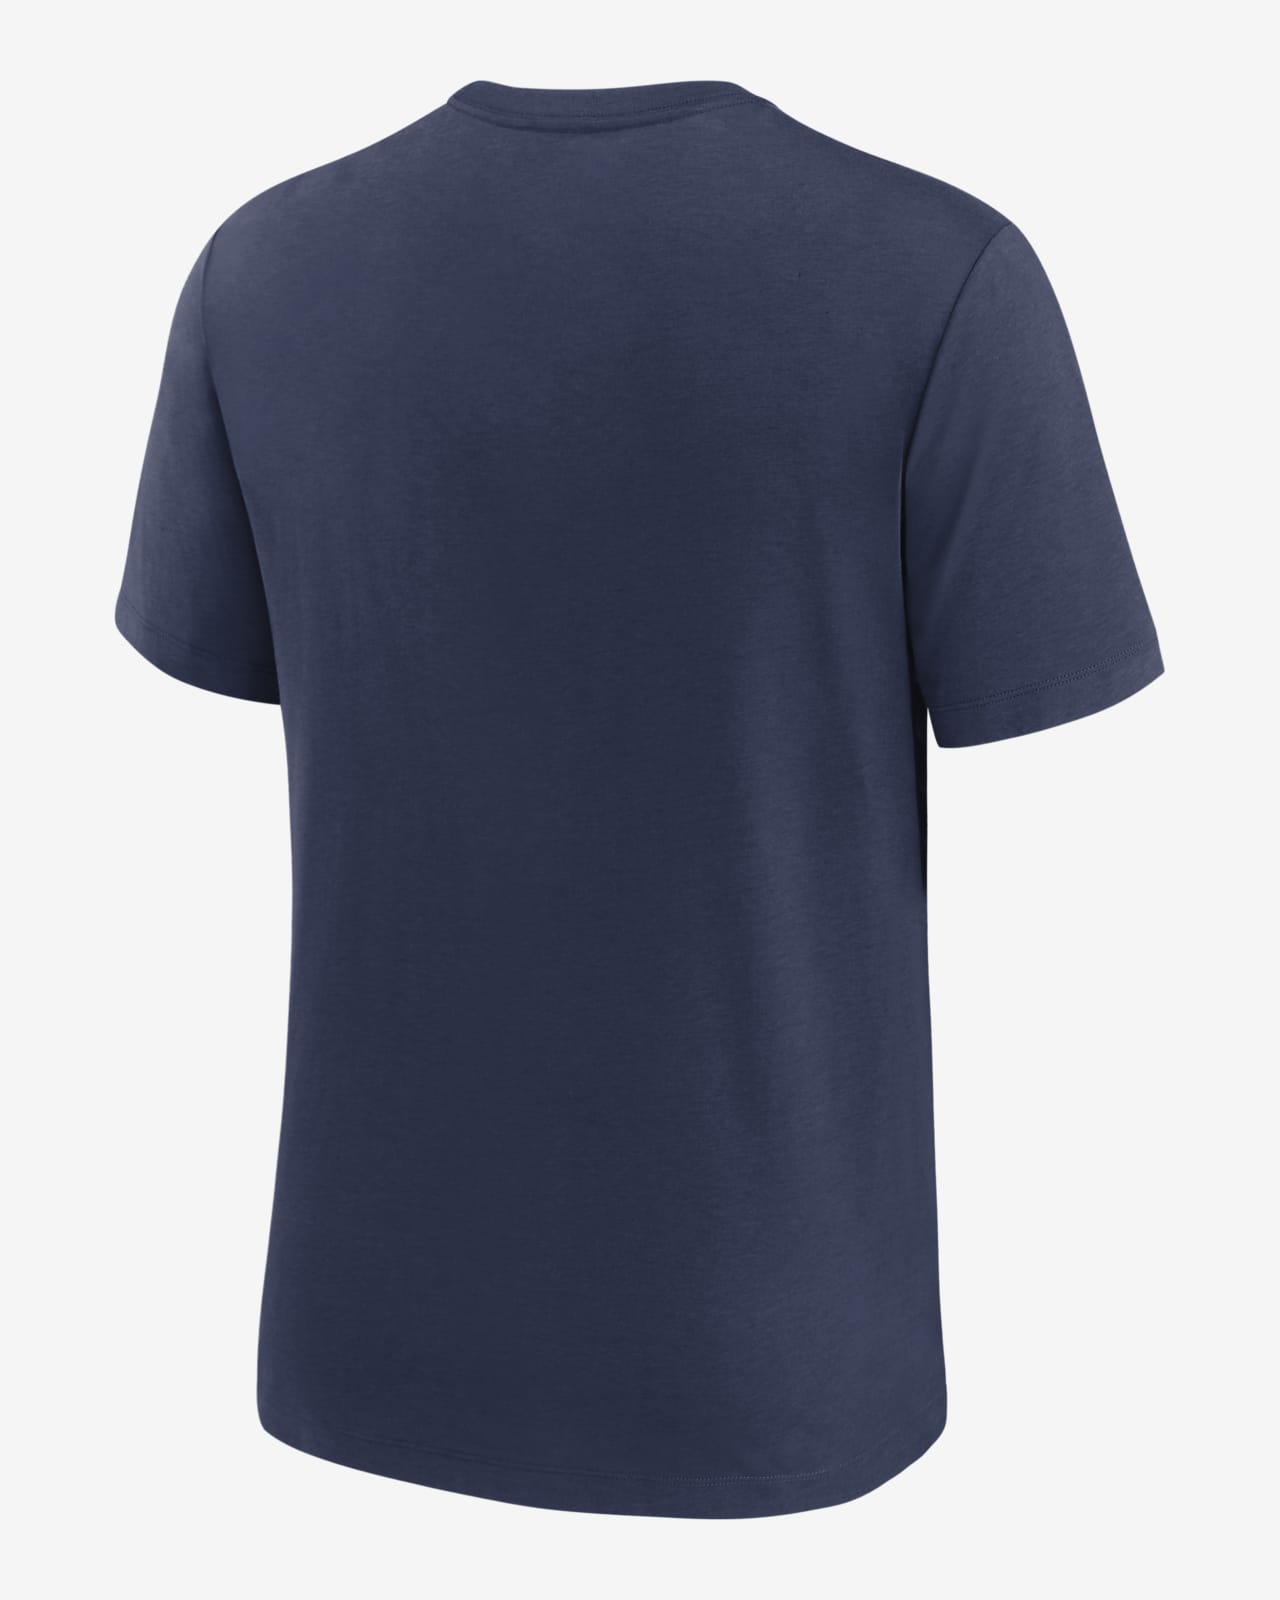 Nike Dri-FIT Team (MLB Boston Red Sox) Men's T-Shirt